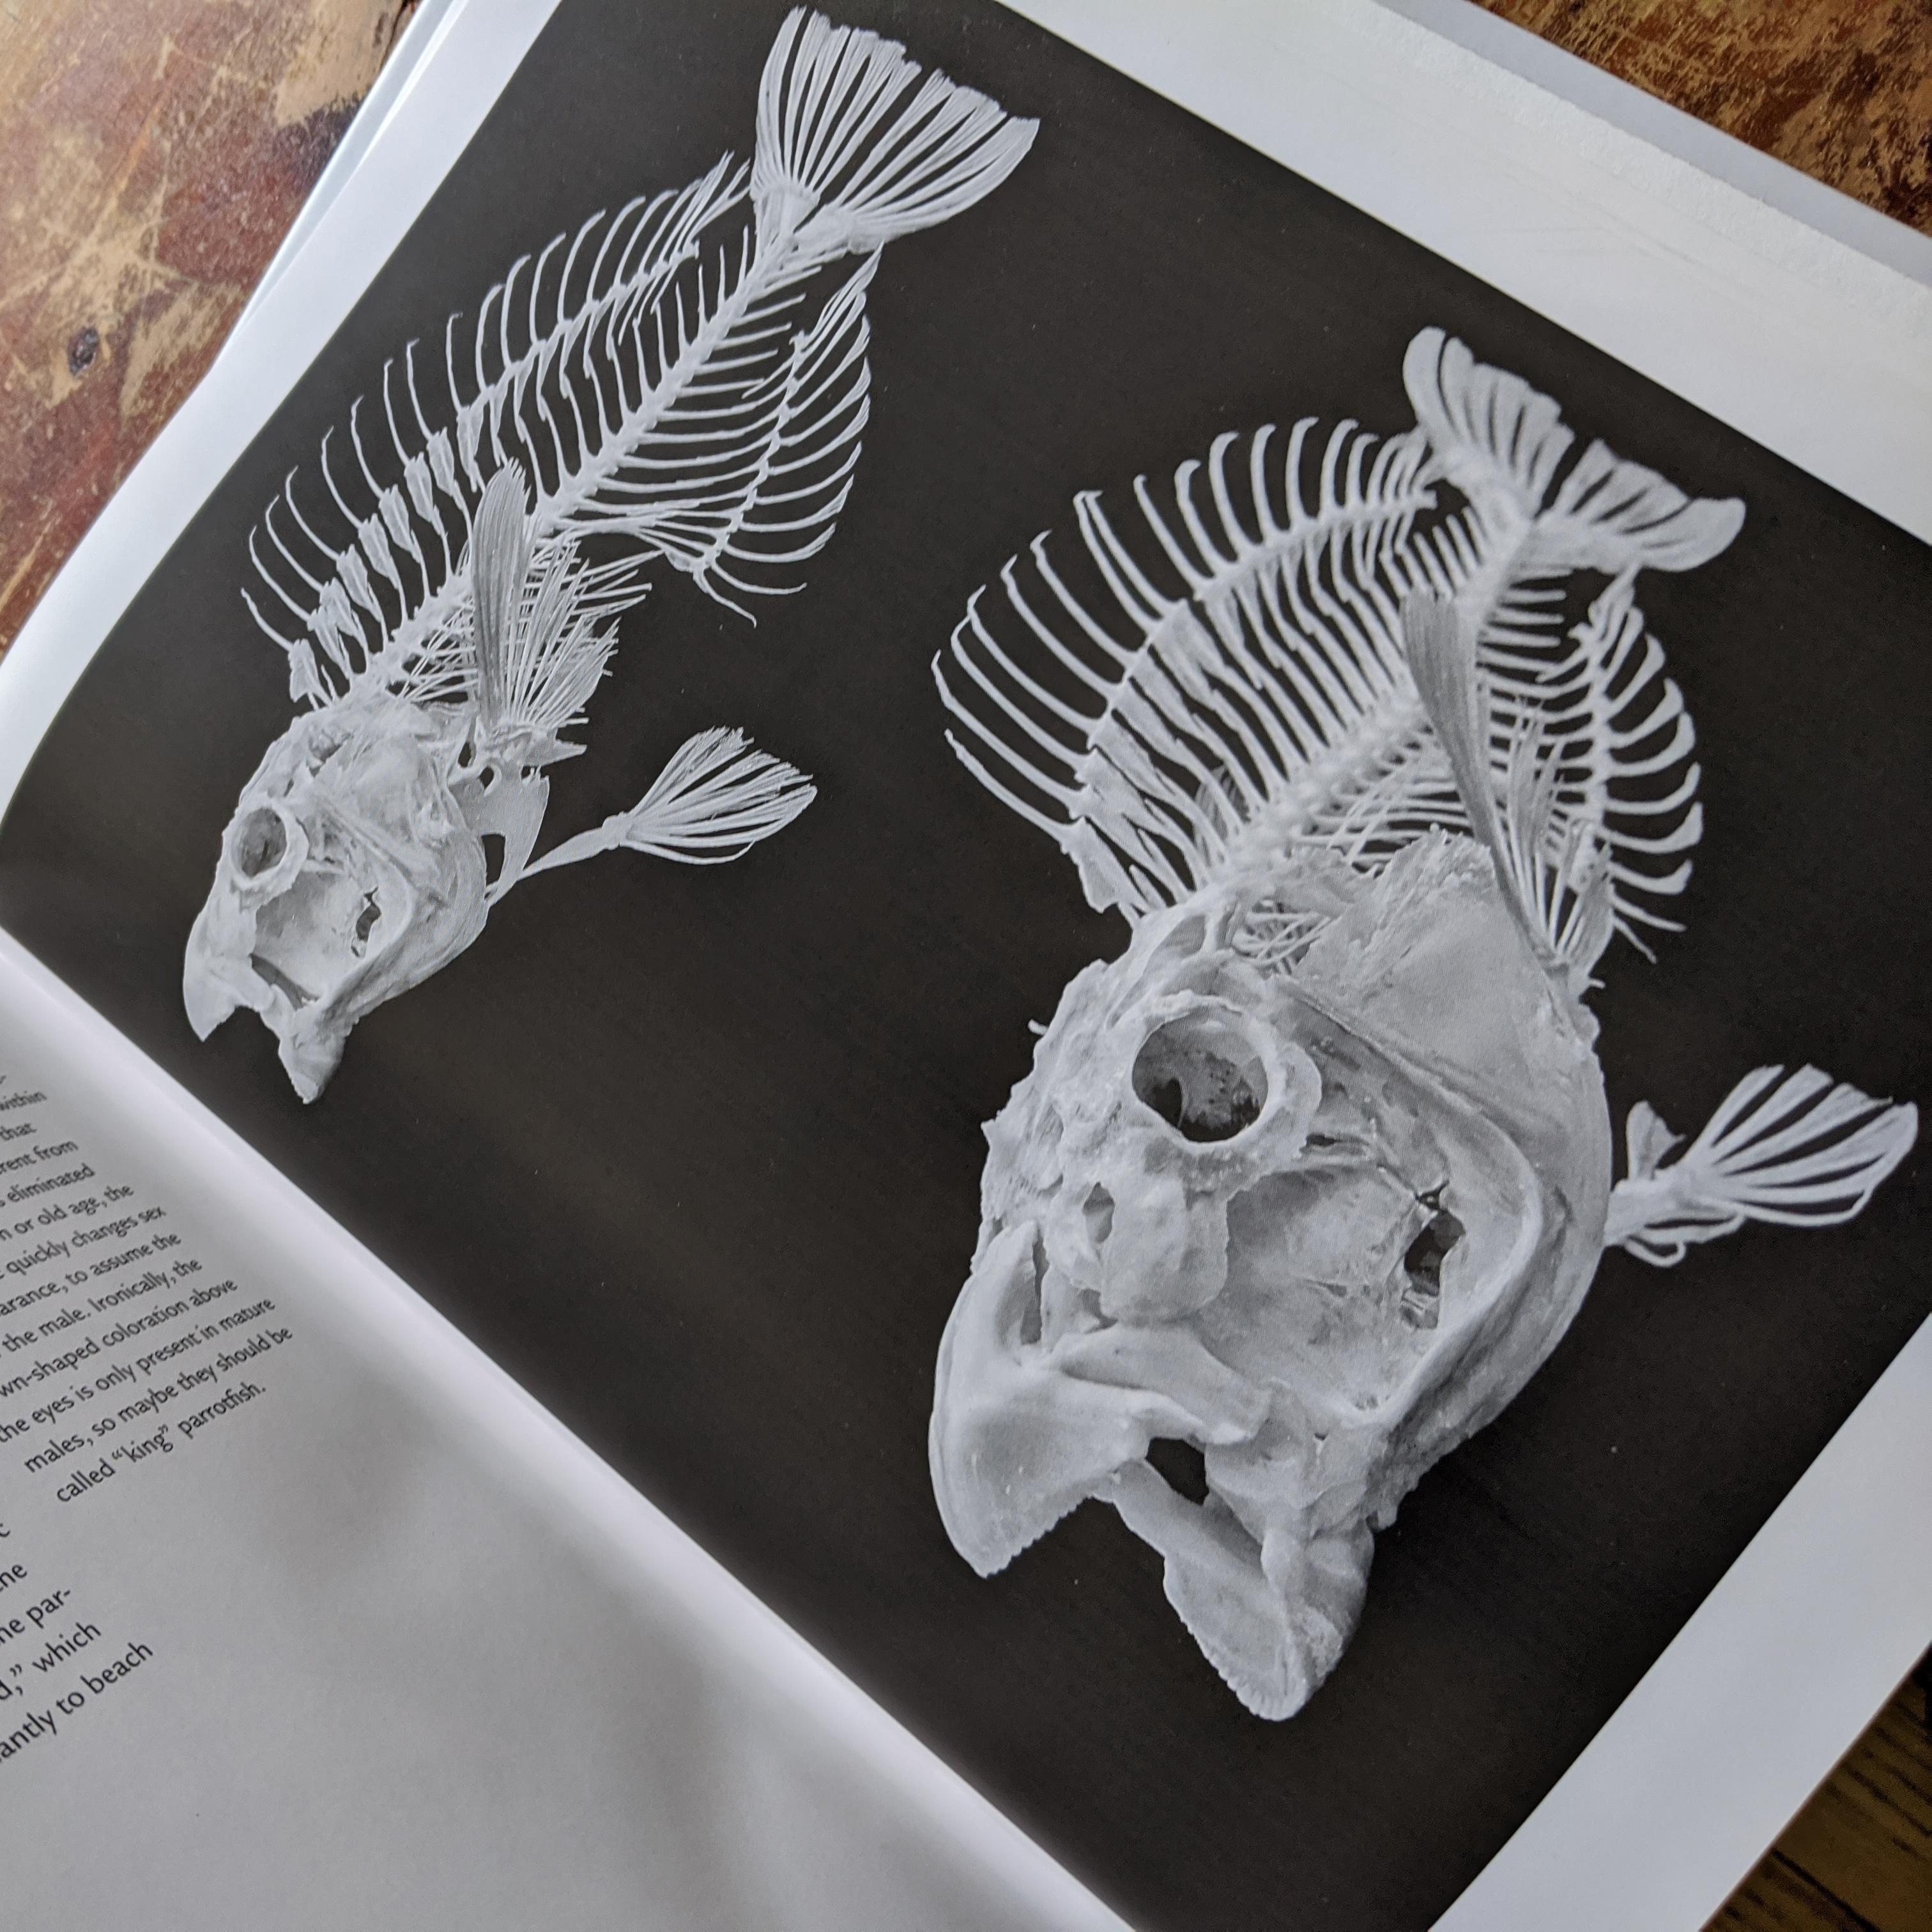 The Skeleton Revealed: An Illustrated Tour of the Vertebrates.